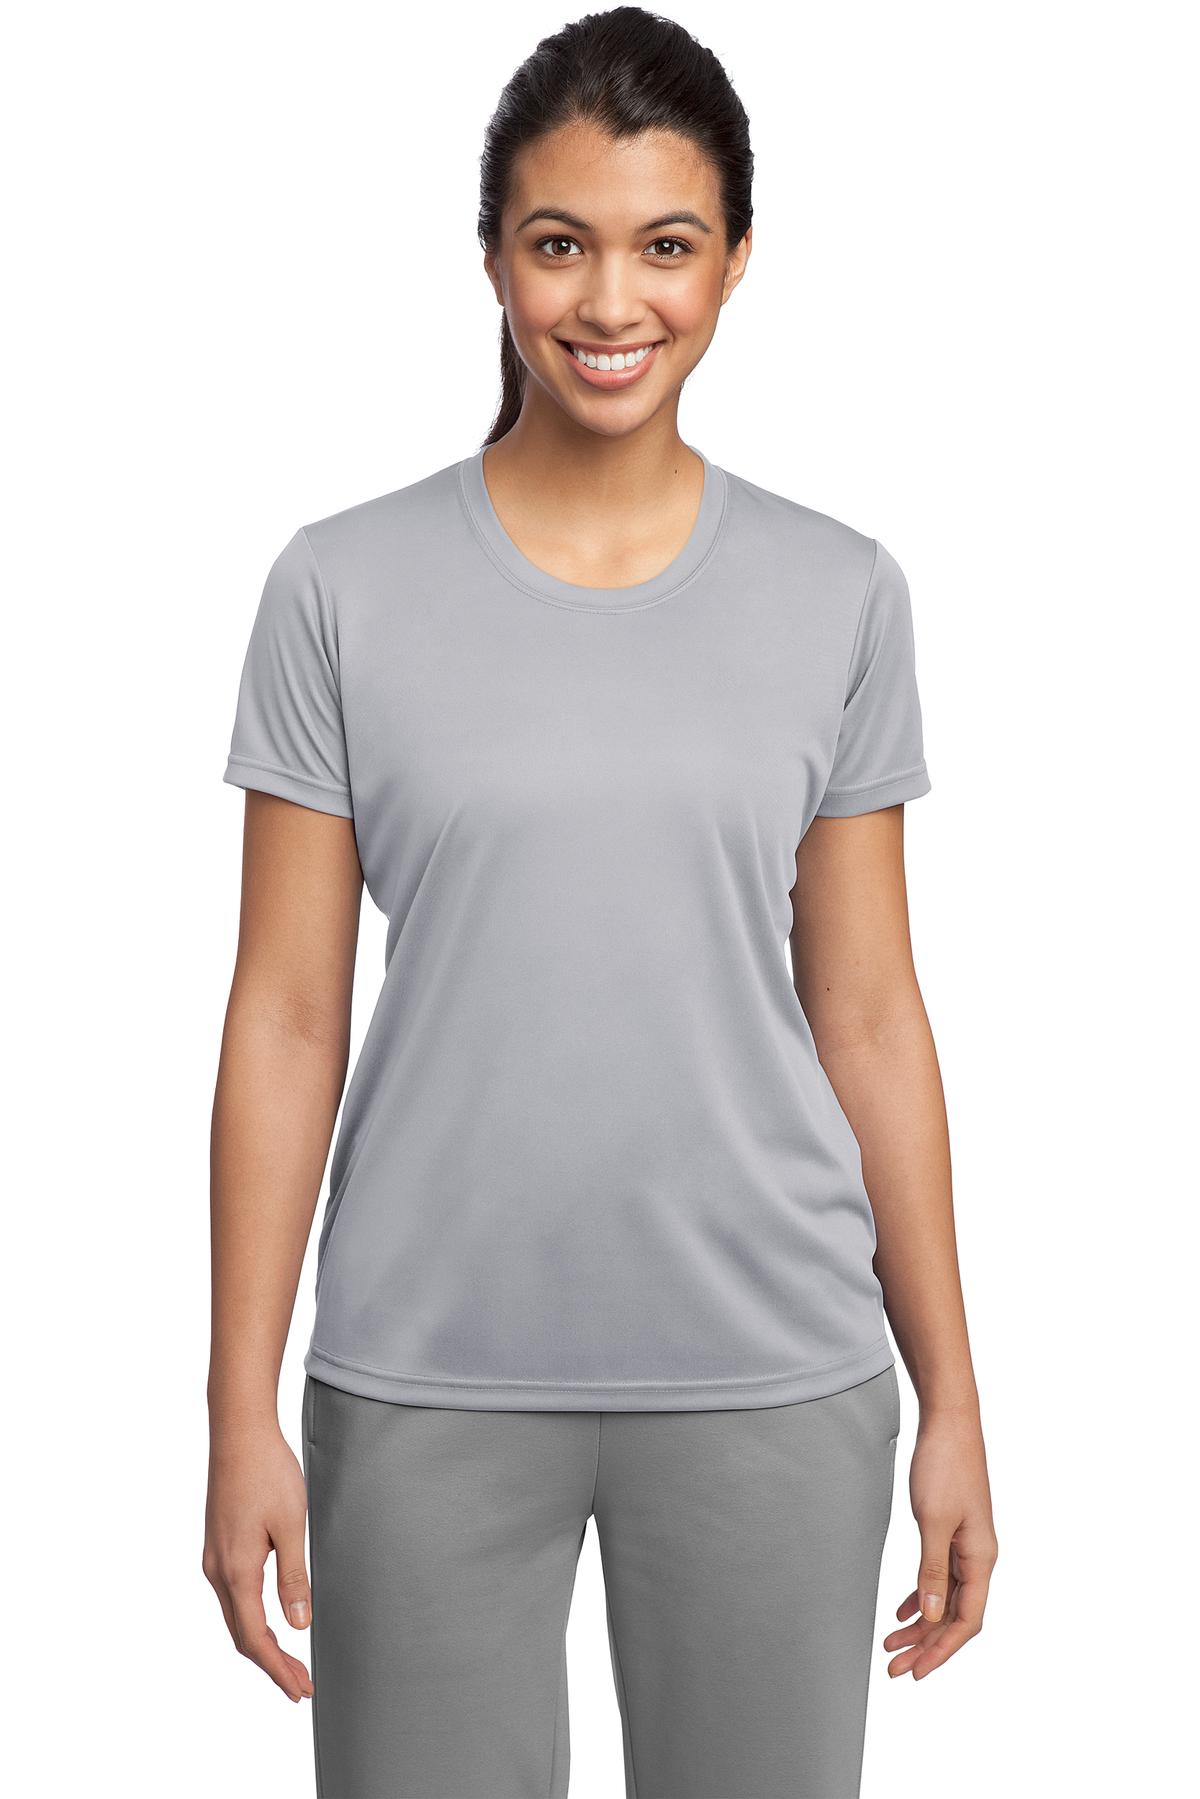 Womens Sport-Tek Dry Fit Gym Workout Performance Moisture Wicking T-Shirt LST350 